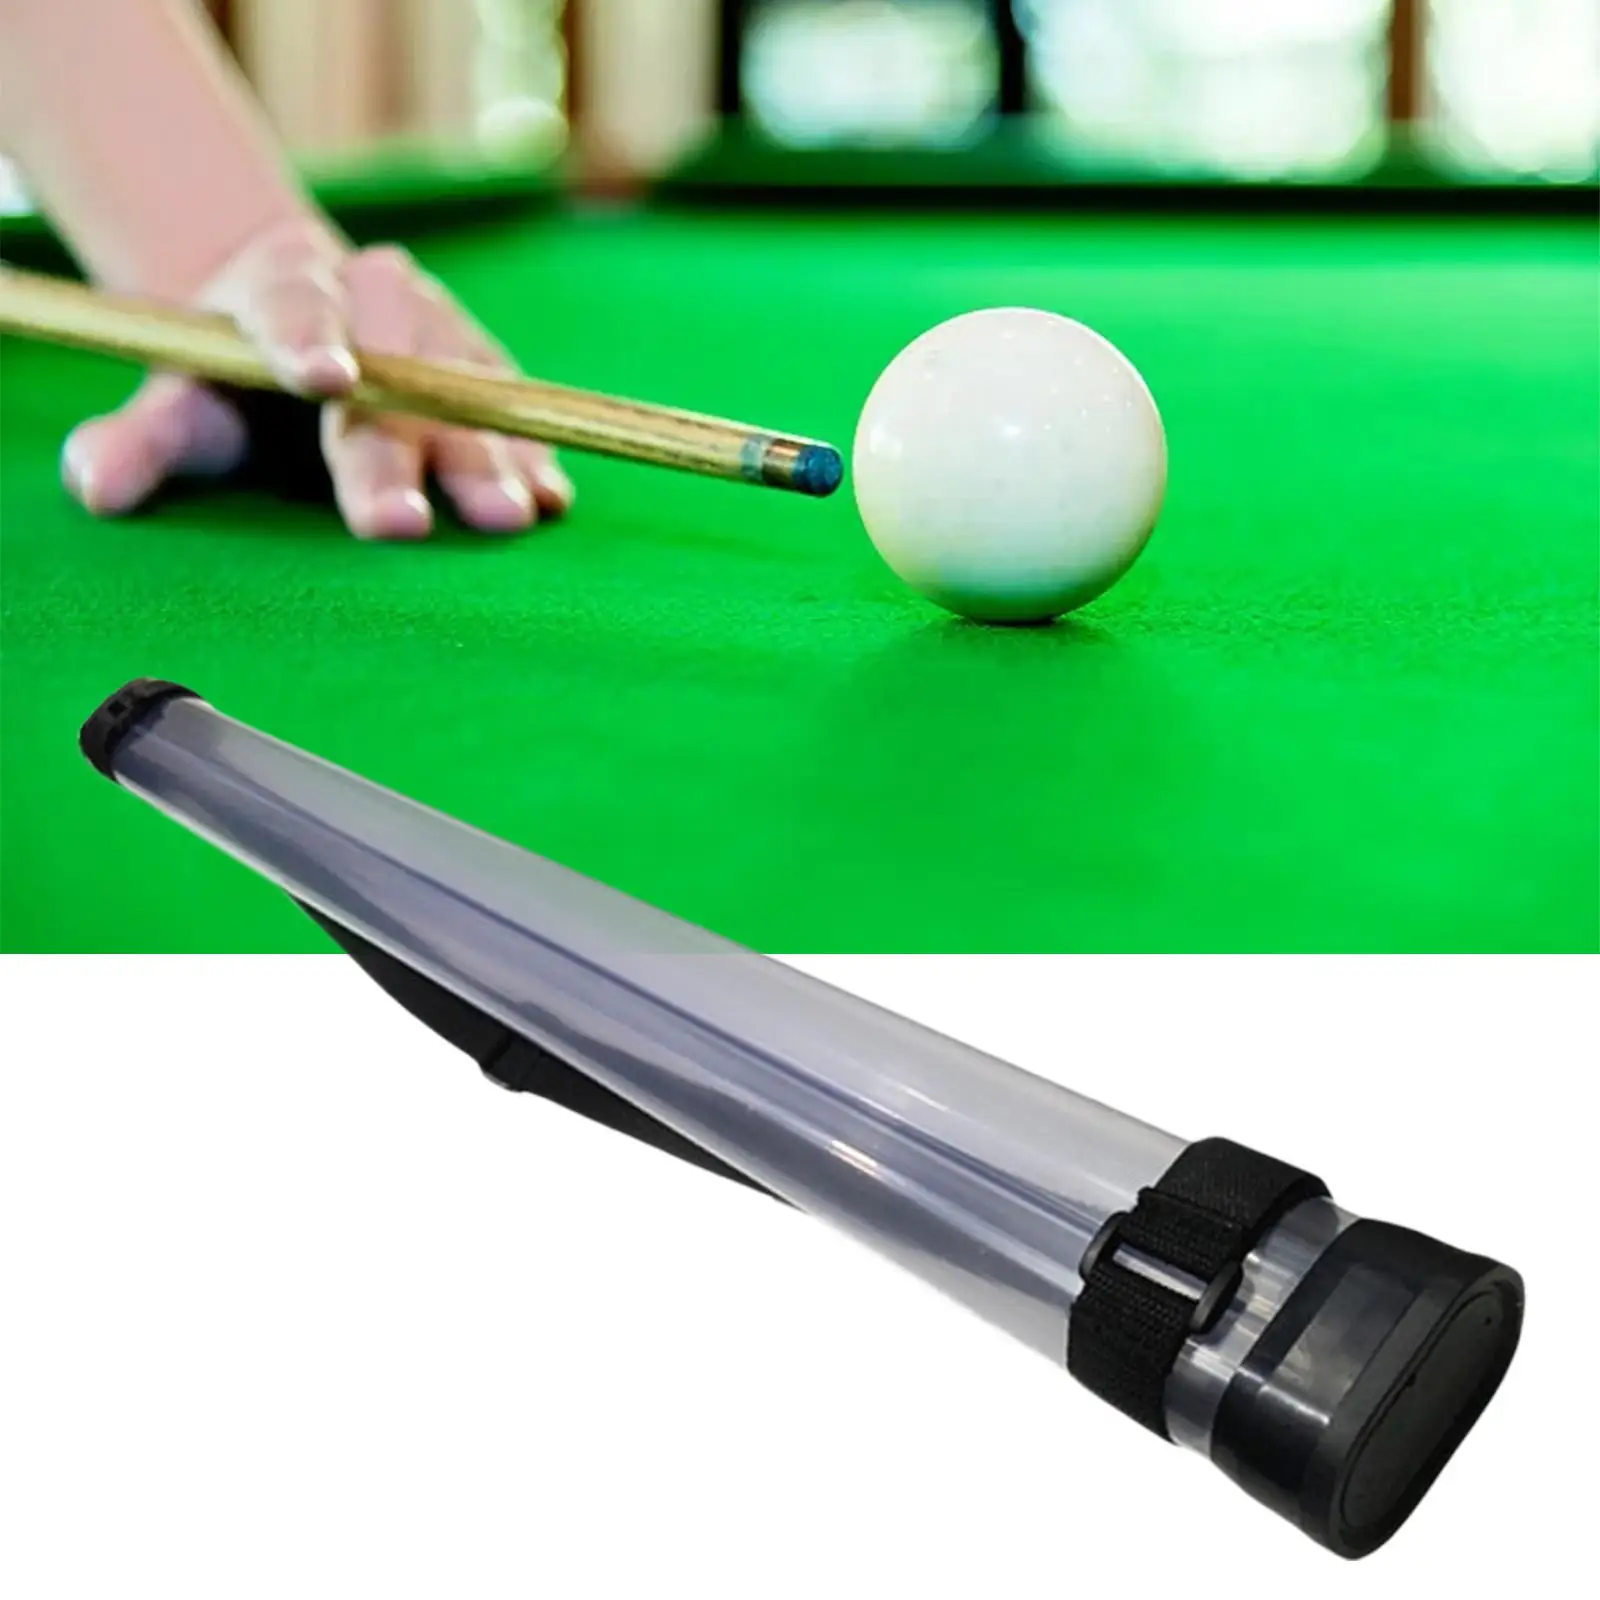 Billiards Pool Cue Case Adjustable Shoulder Strap Professional Hard Snooker Cue Case Hard Pool 1/2 Cue Case for Billiard Rod